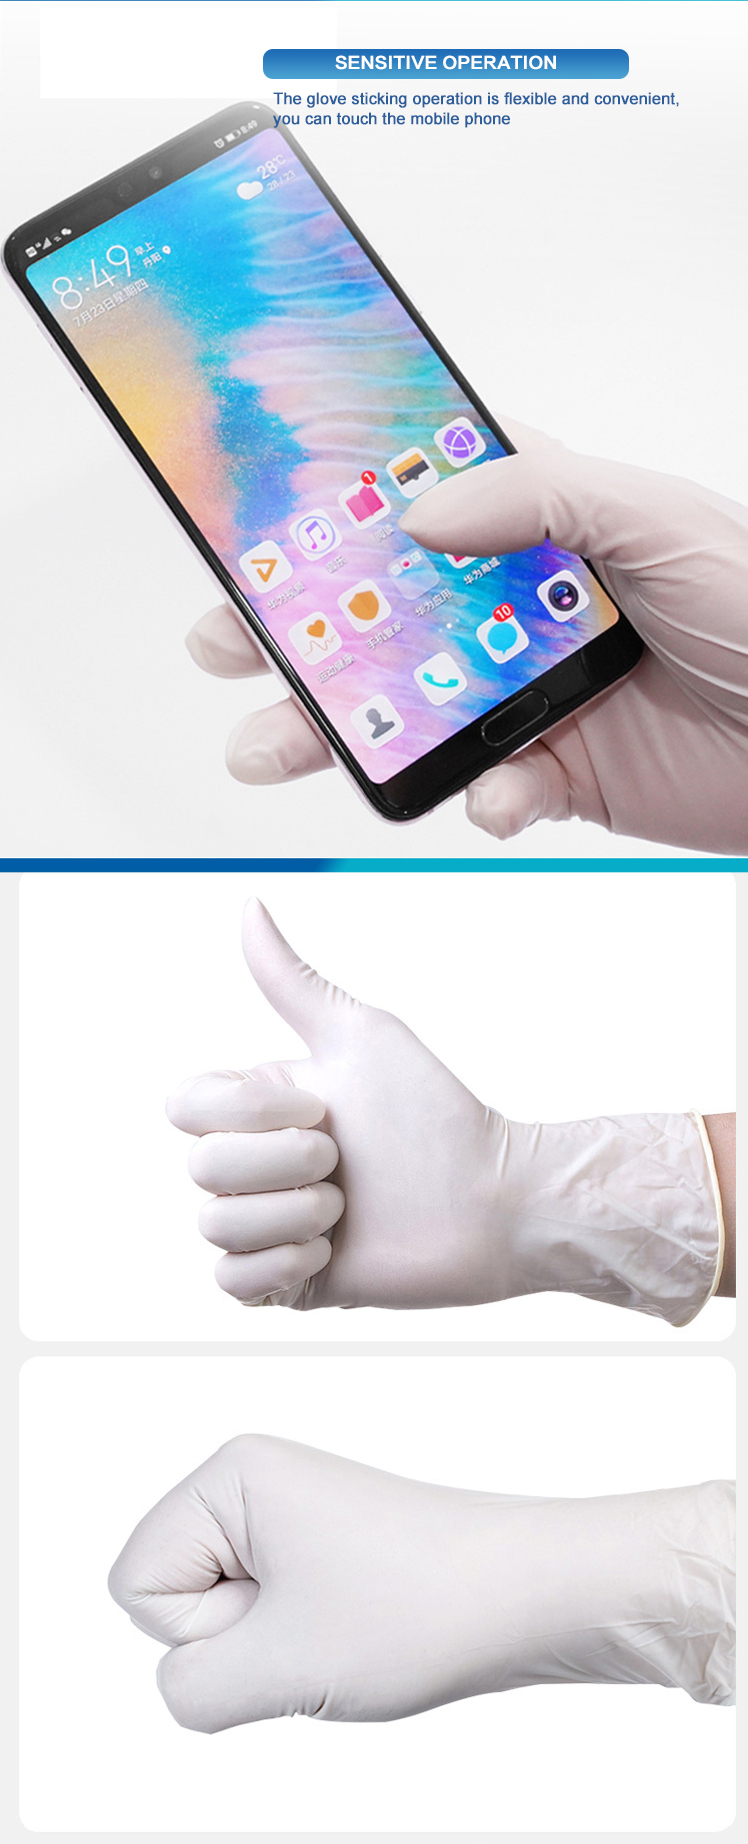 Manufacturer direct sales of non-sterile surgical medical gloves